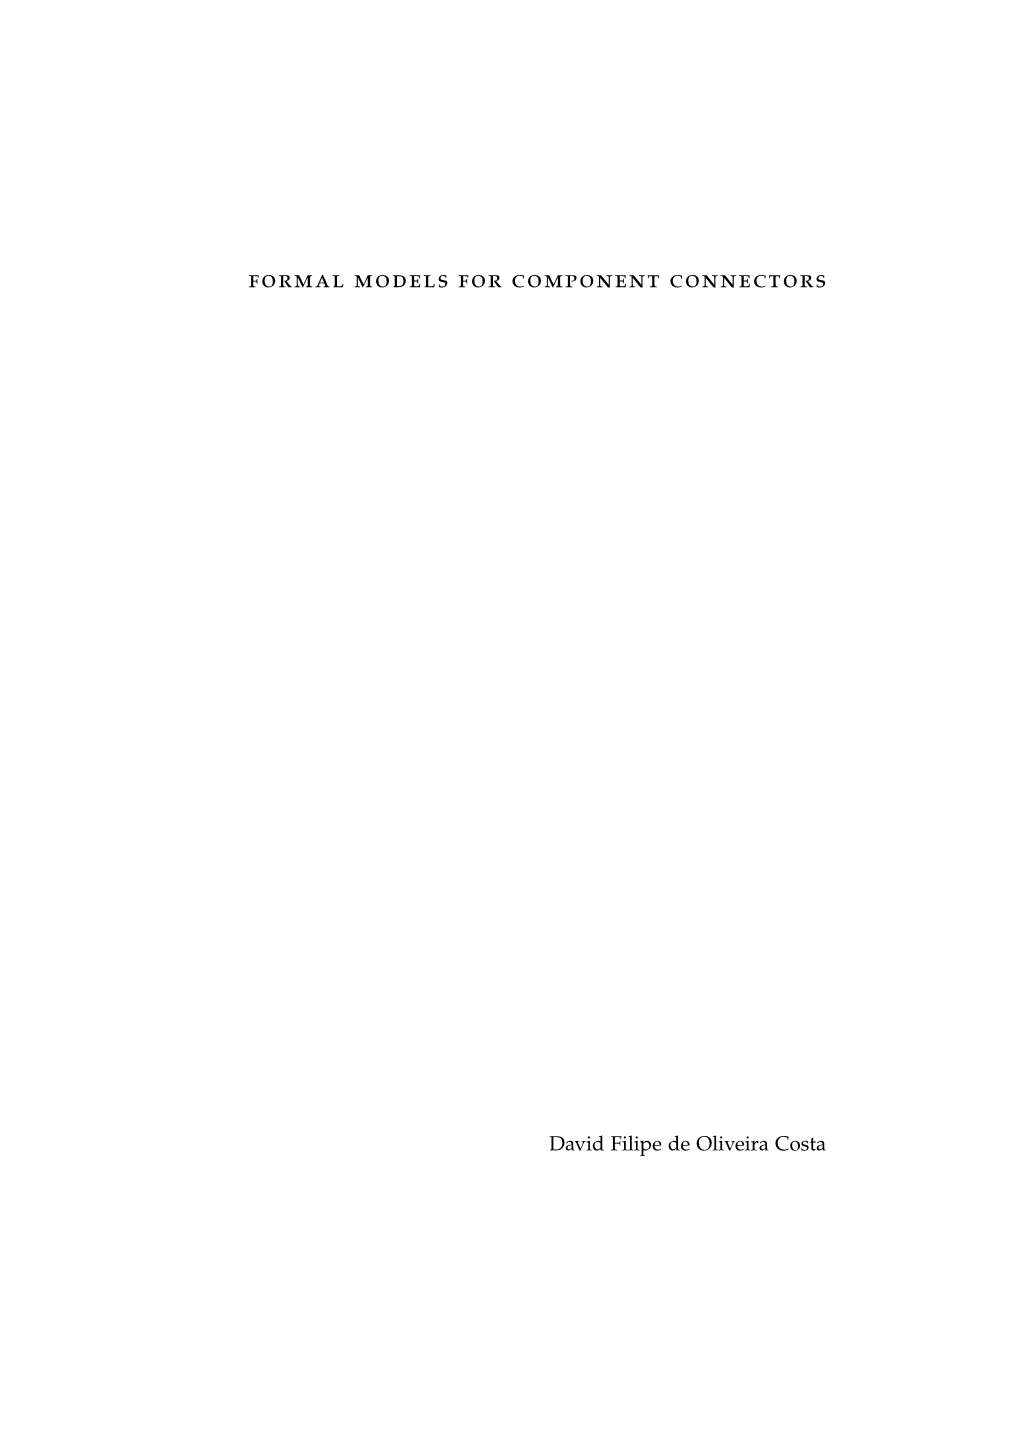 Formal Models for Component Connectors